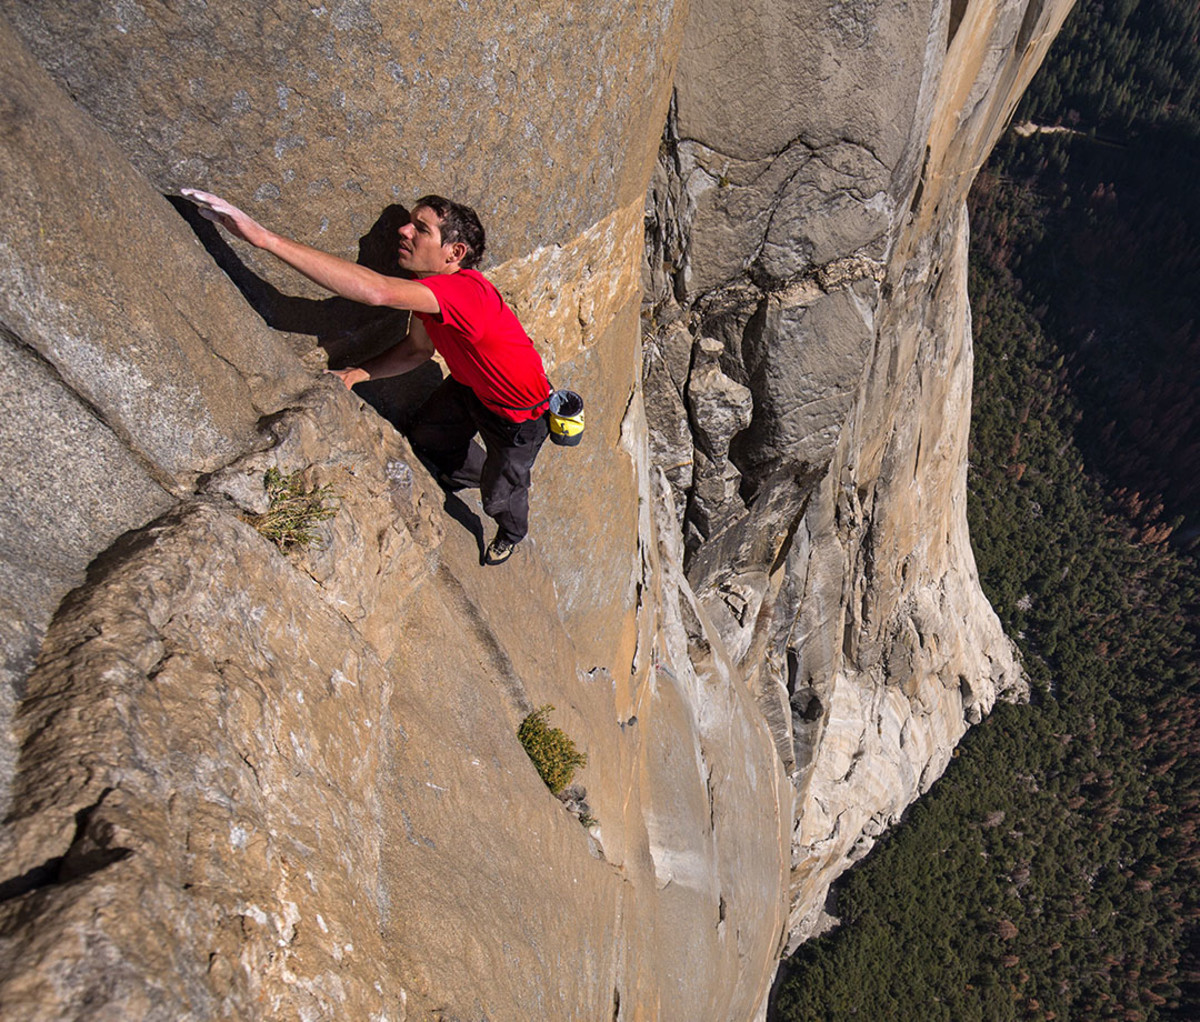 Alex Honnold scaling El Capitan in 